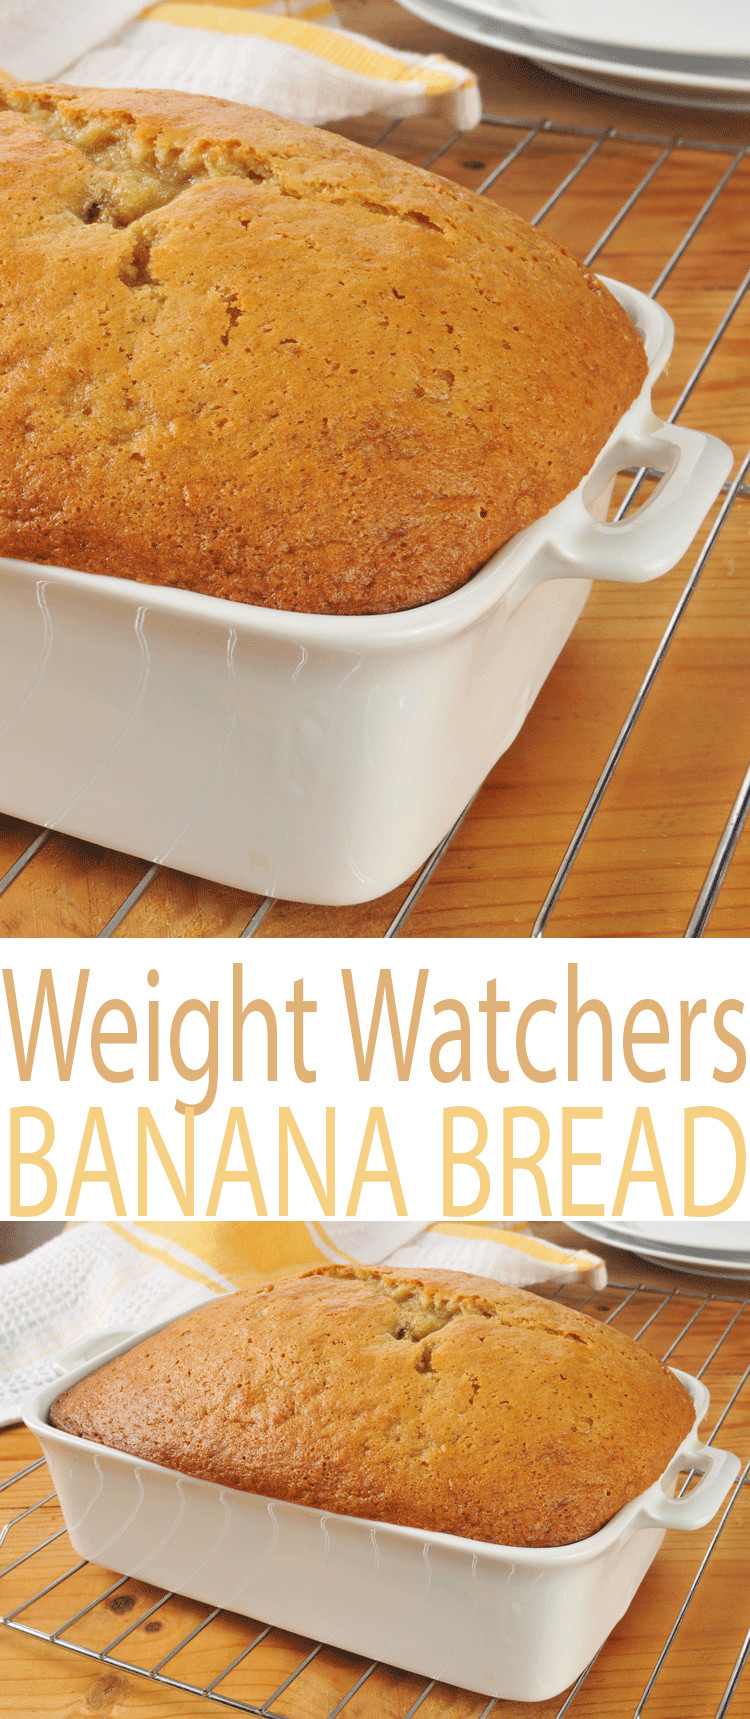 Weight Watchers Banana Bread
 Weight Watchers Banana Bread Recipe